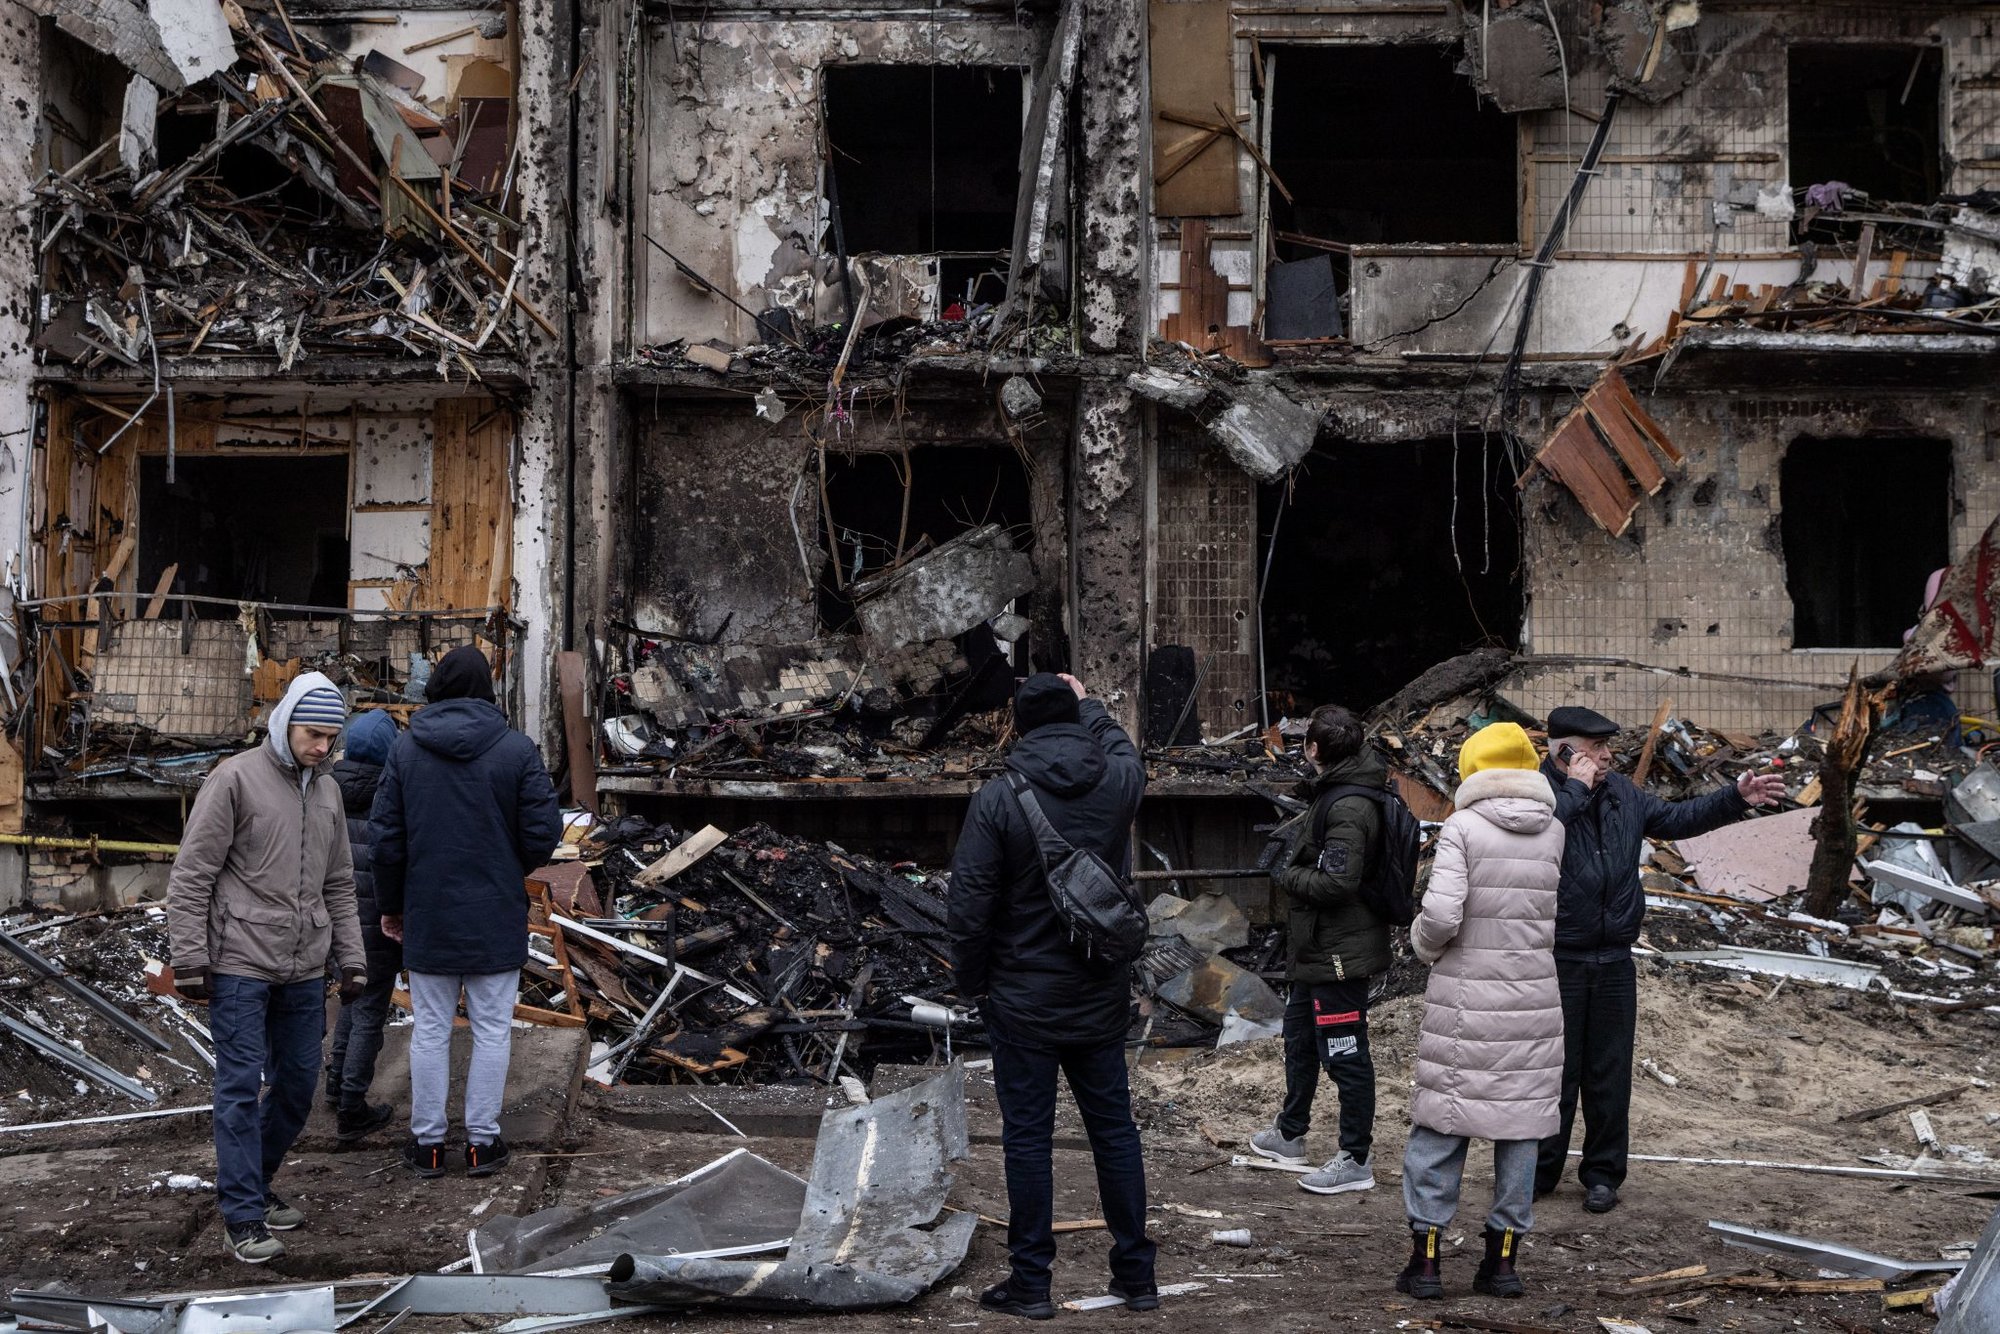 kyiv under siege, russian military invasion